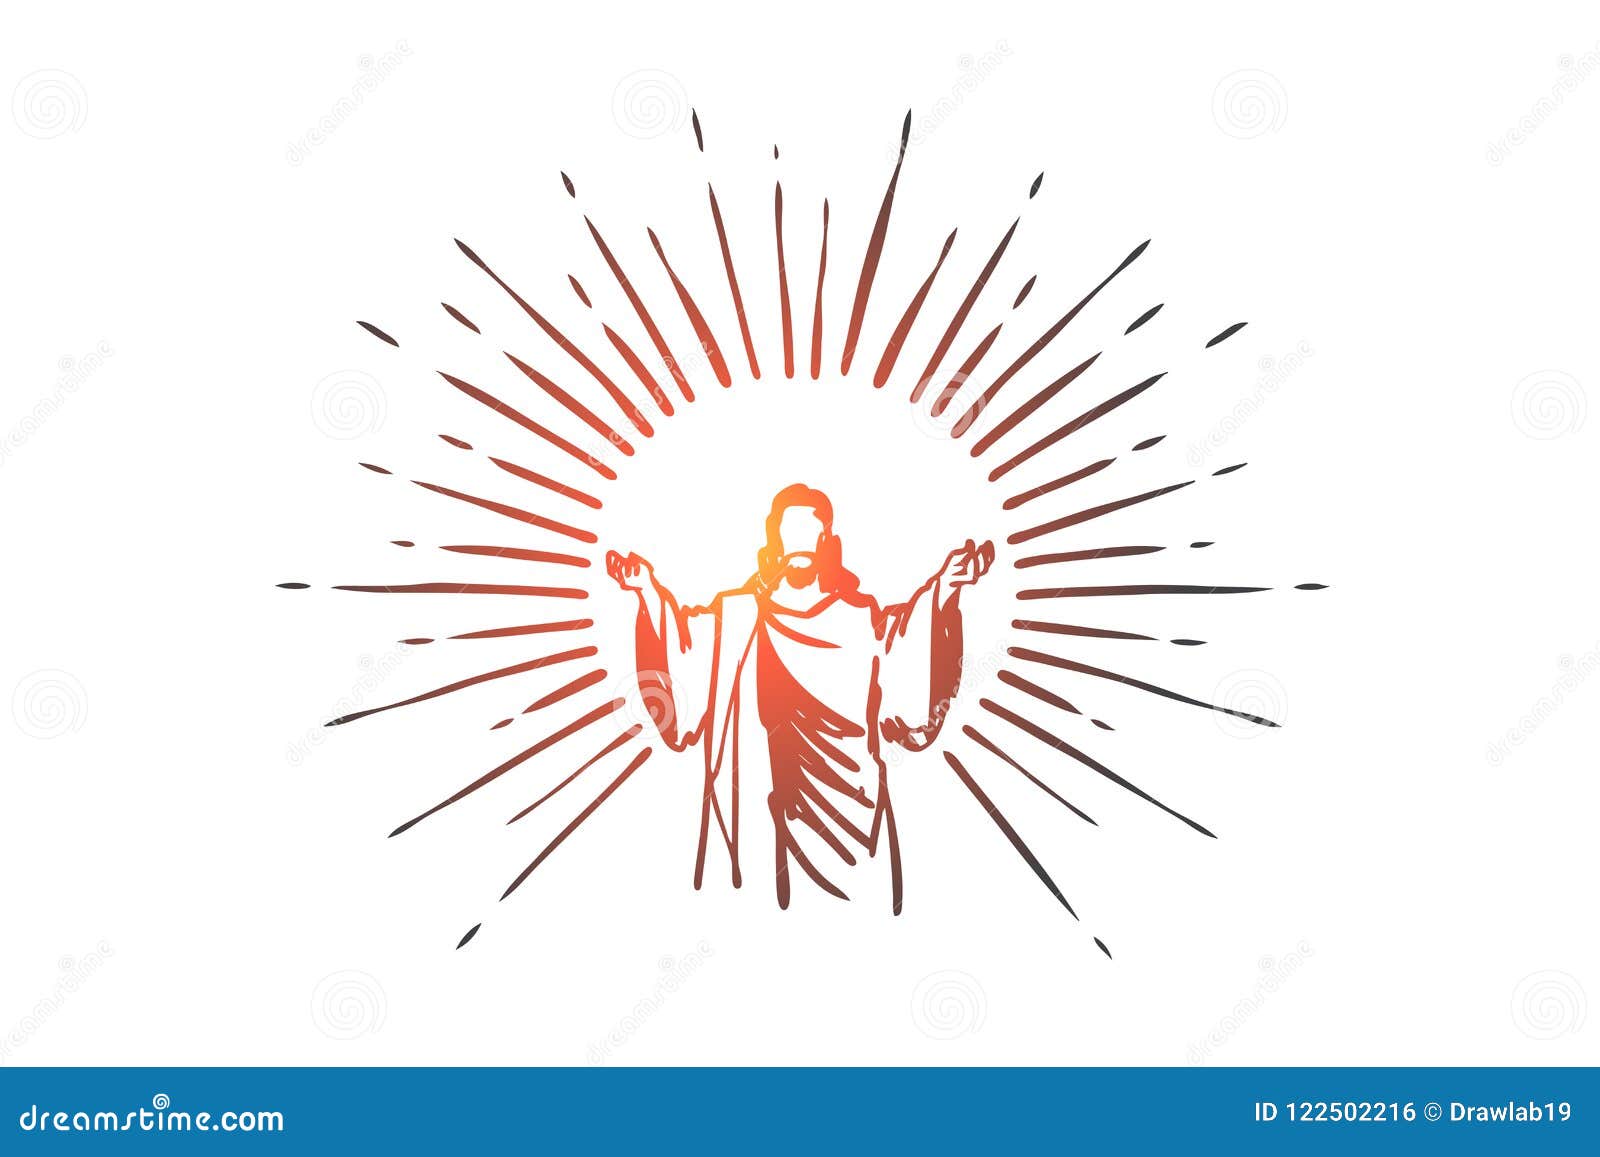 god, jesus christ, grace, good, ascension concept. hand drawn  .